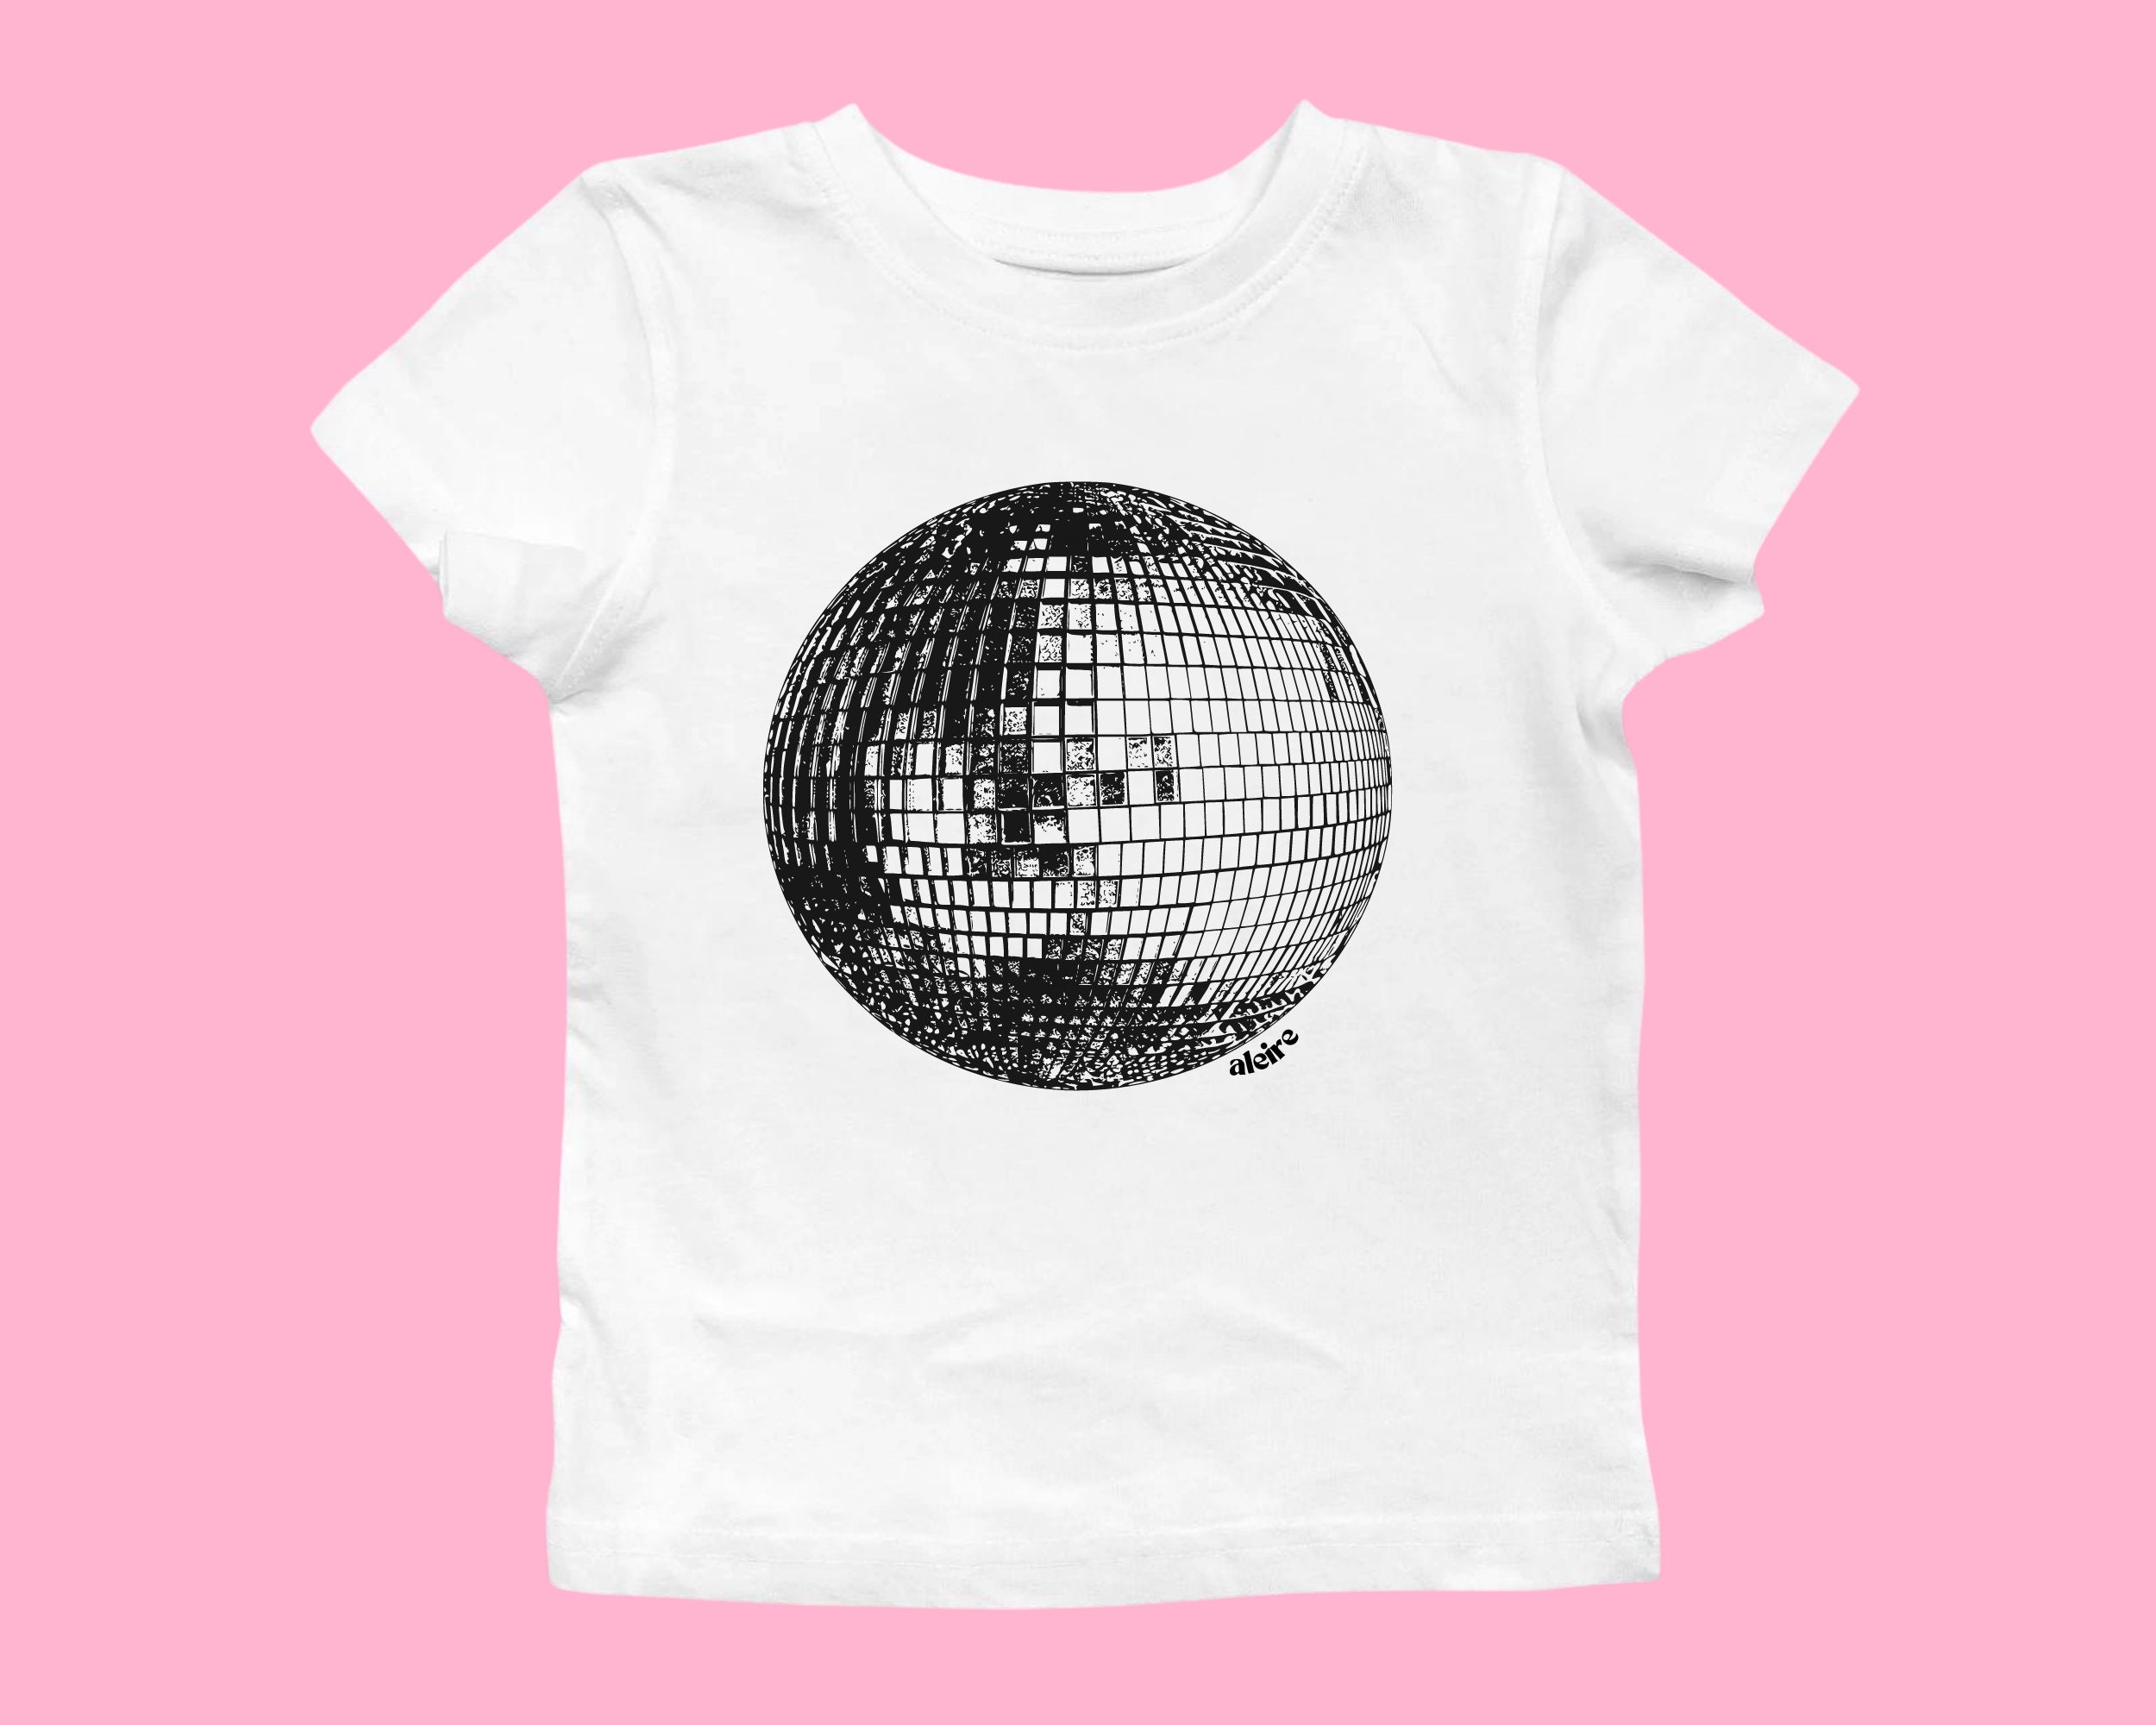 Pin by •🍒𝓒𝓱𝓮𝓻𝓻𝔂🍒• on 💐Roblox T-shirts💐, Roblox t shirts, T shirt  picture, Emo shirts